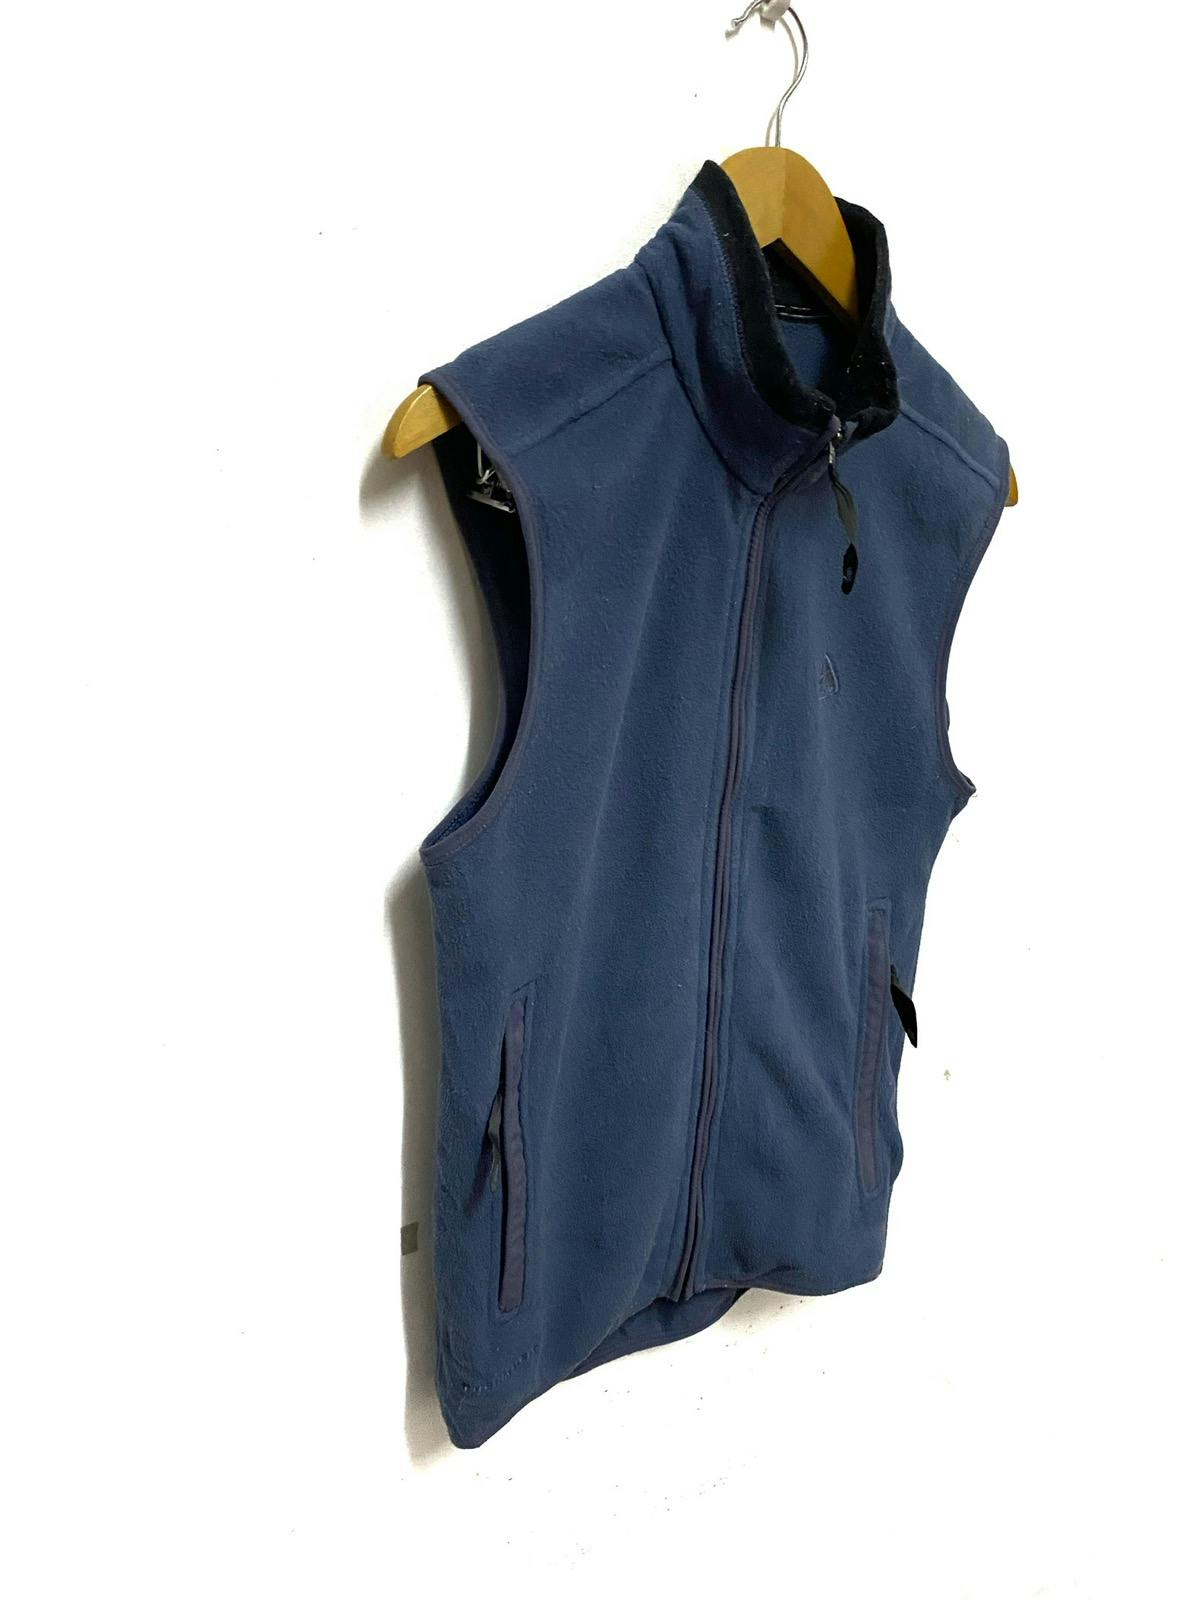 Vintage Nike ACG Therma Fit Vest Jacket - 2